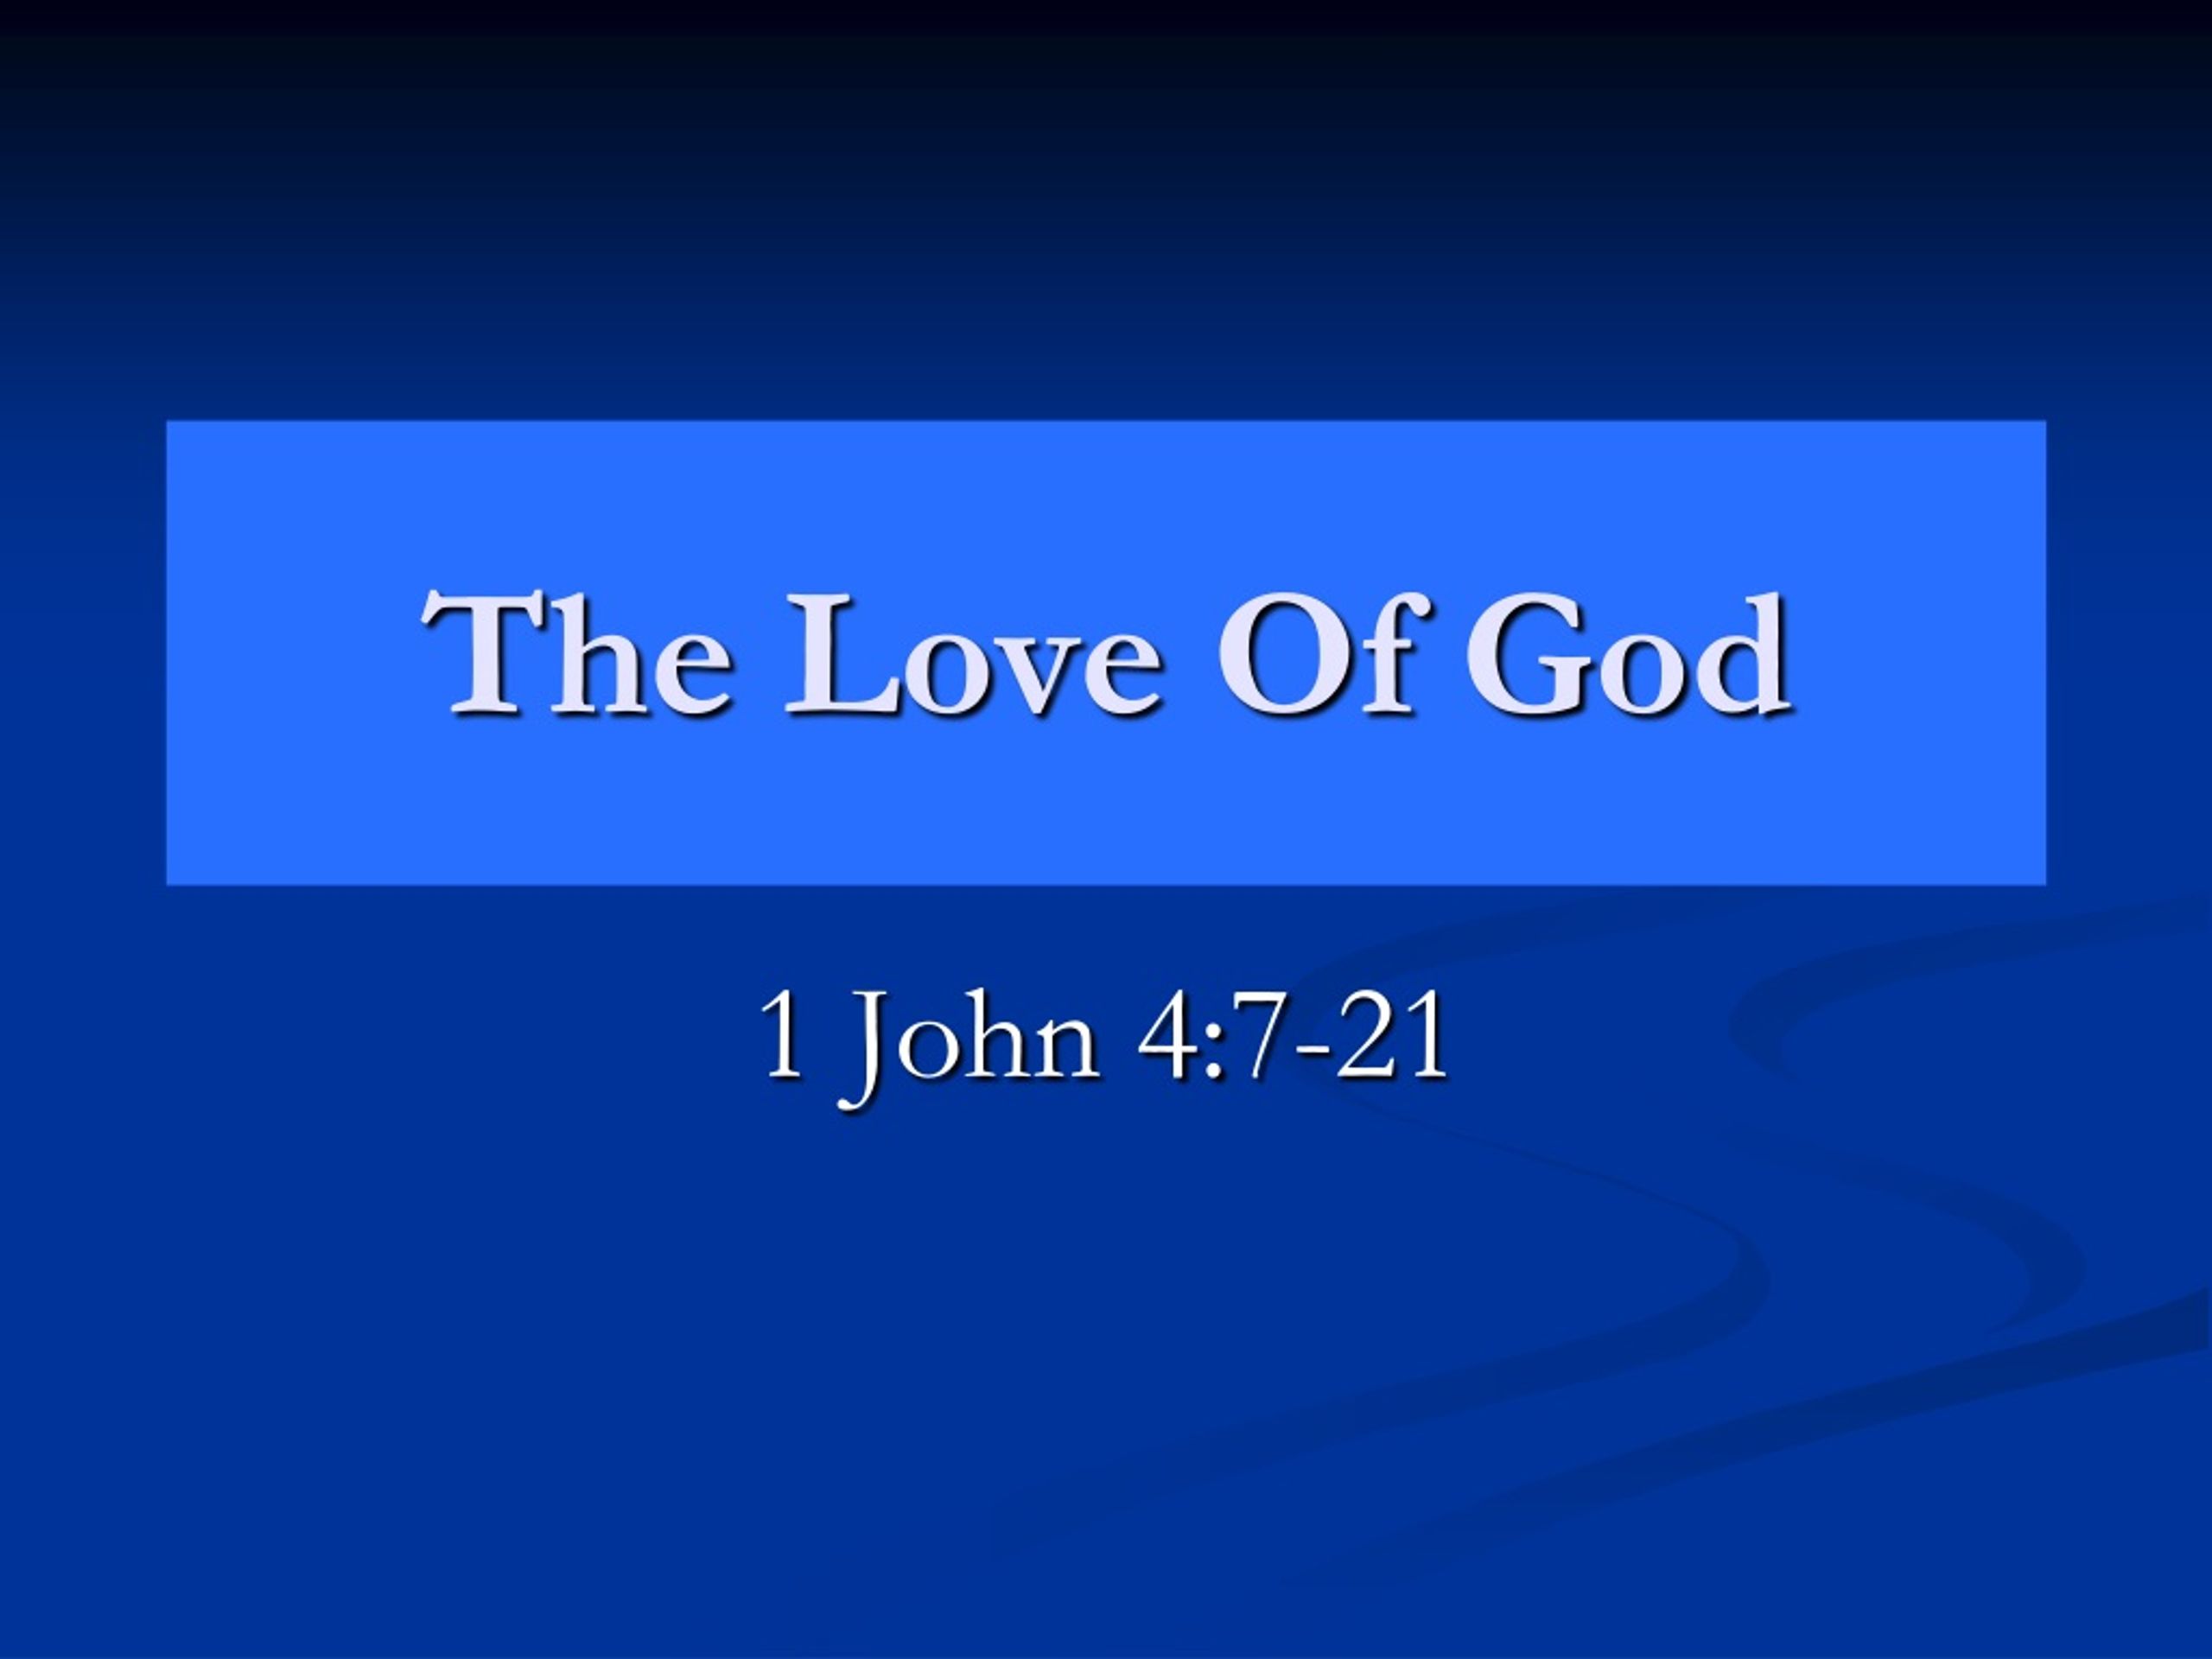 presentation on god's love